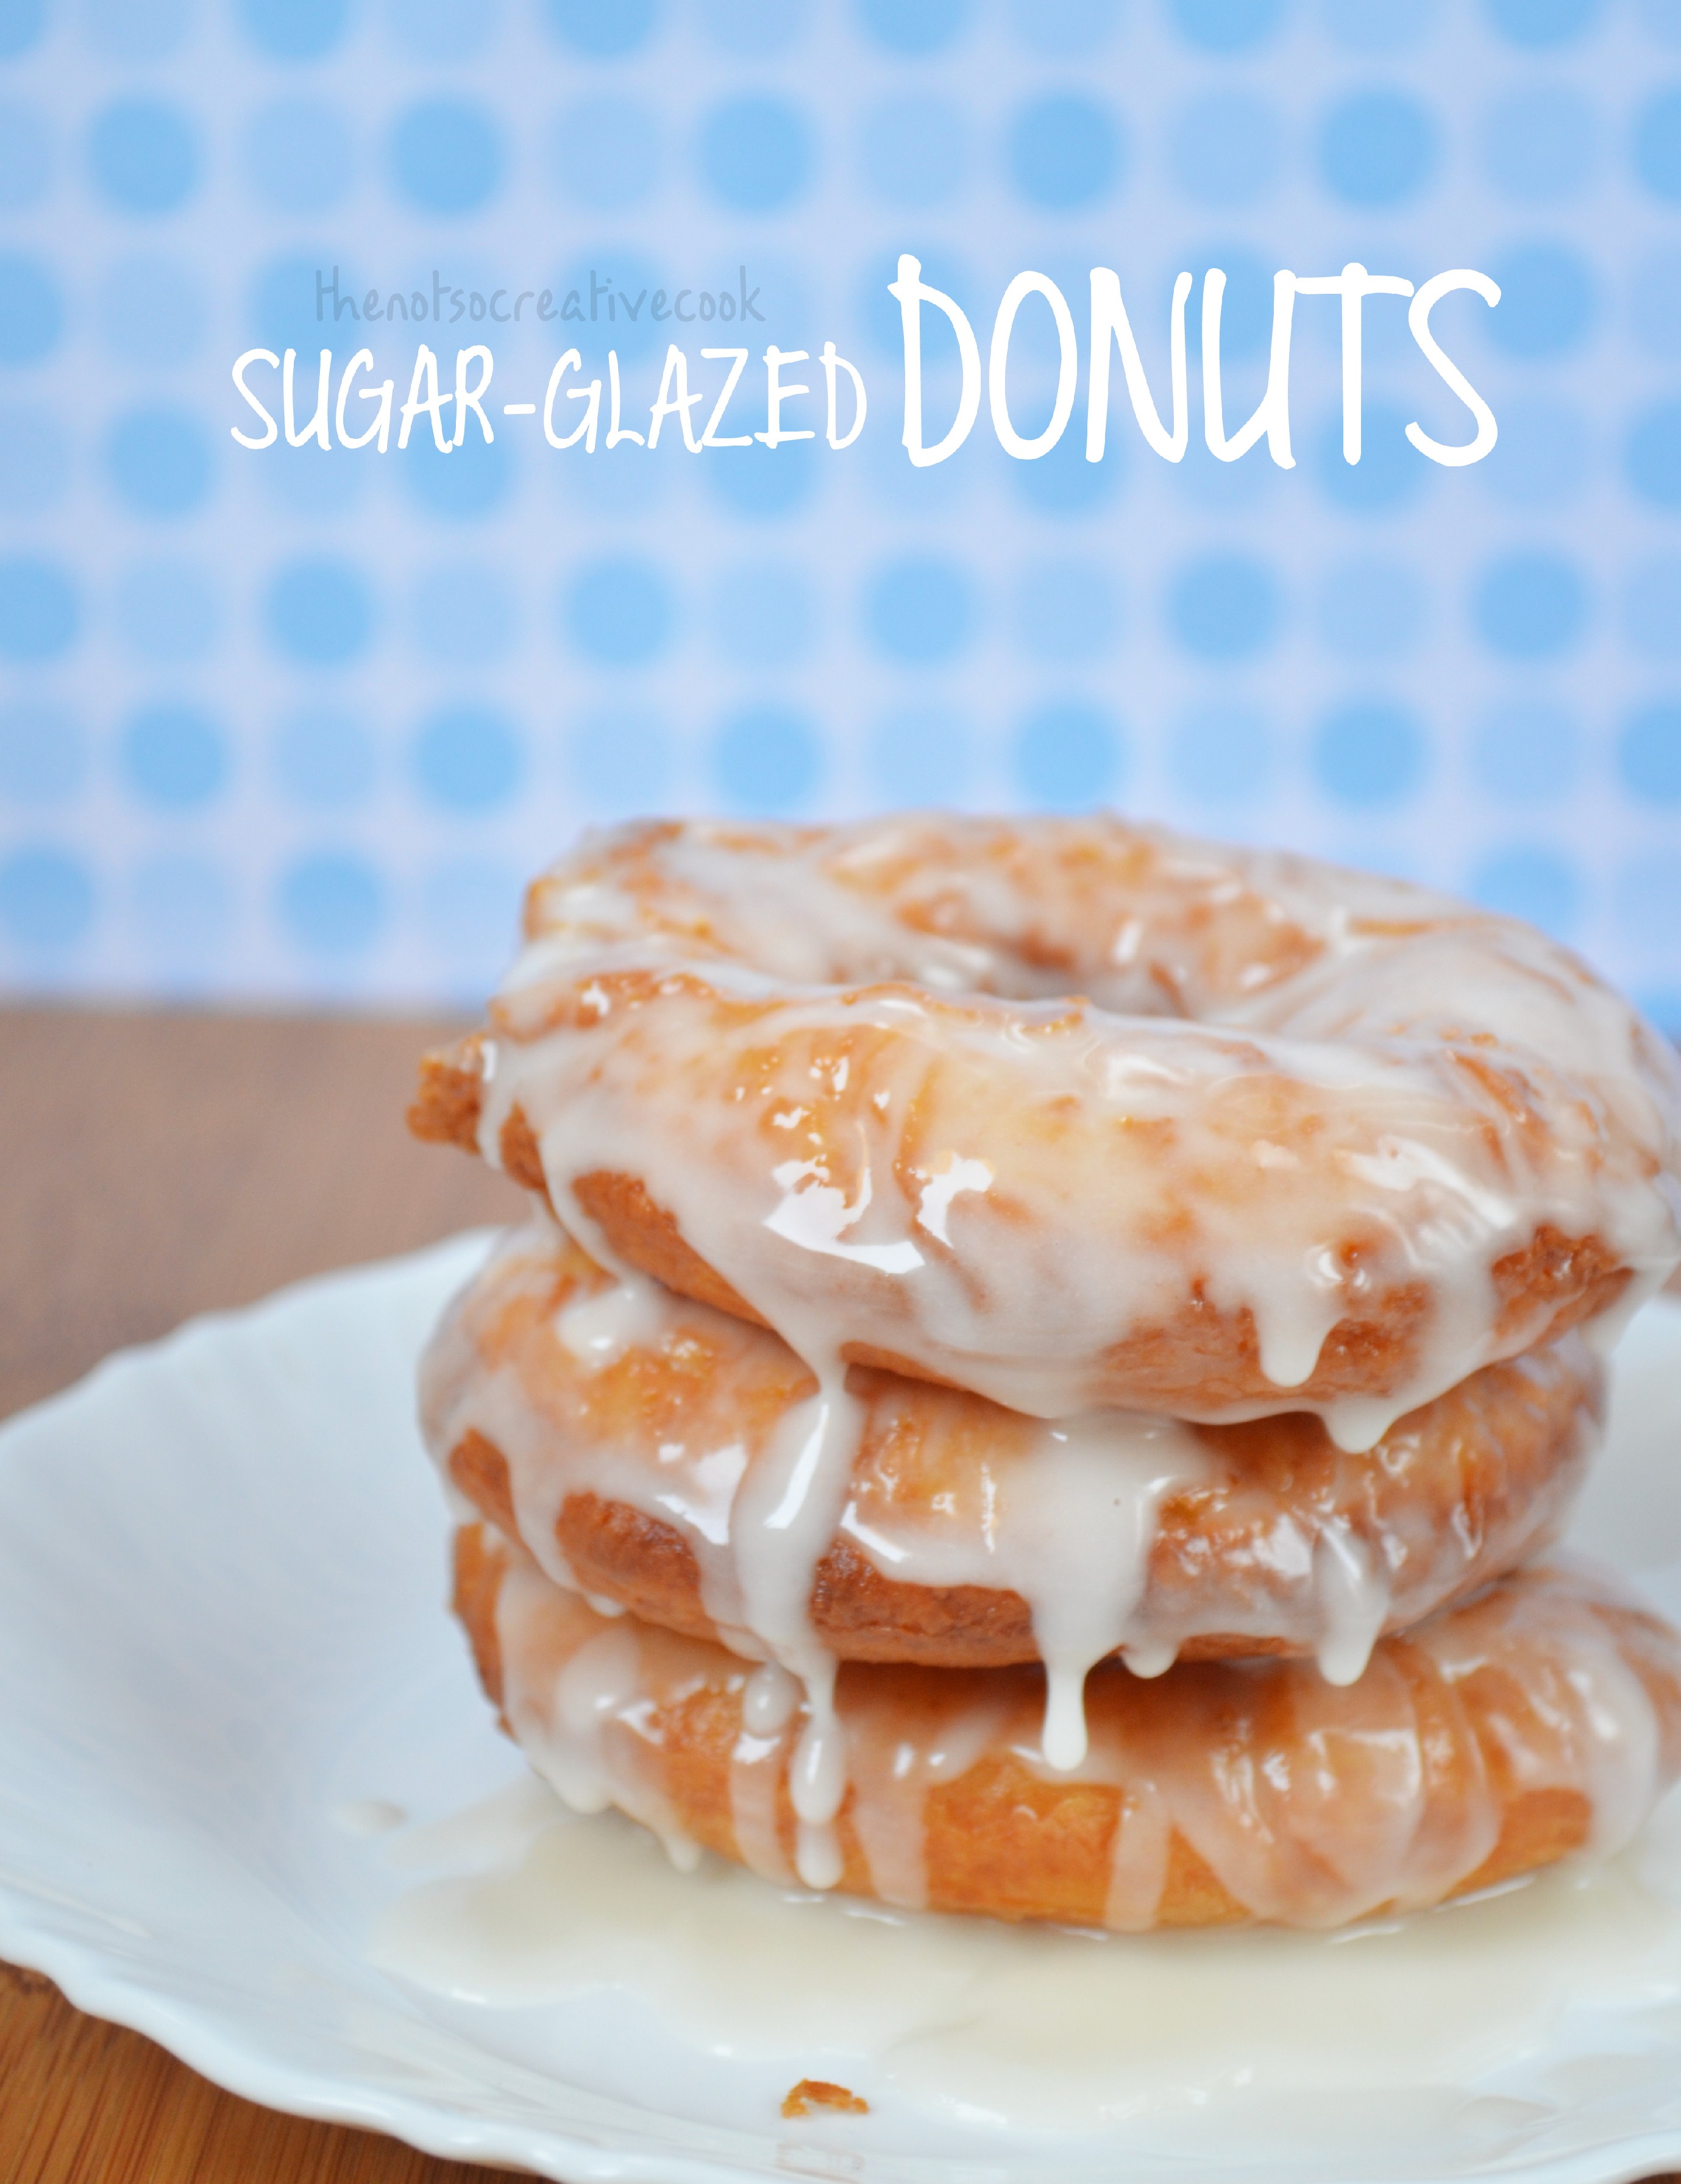 thenotsocreativecook-SugarGlazed donuts